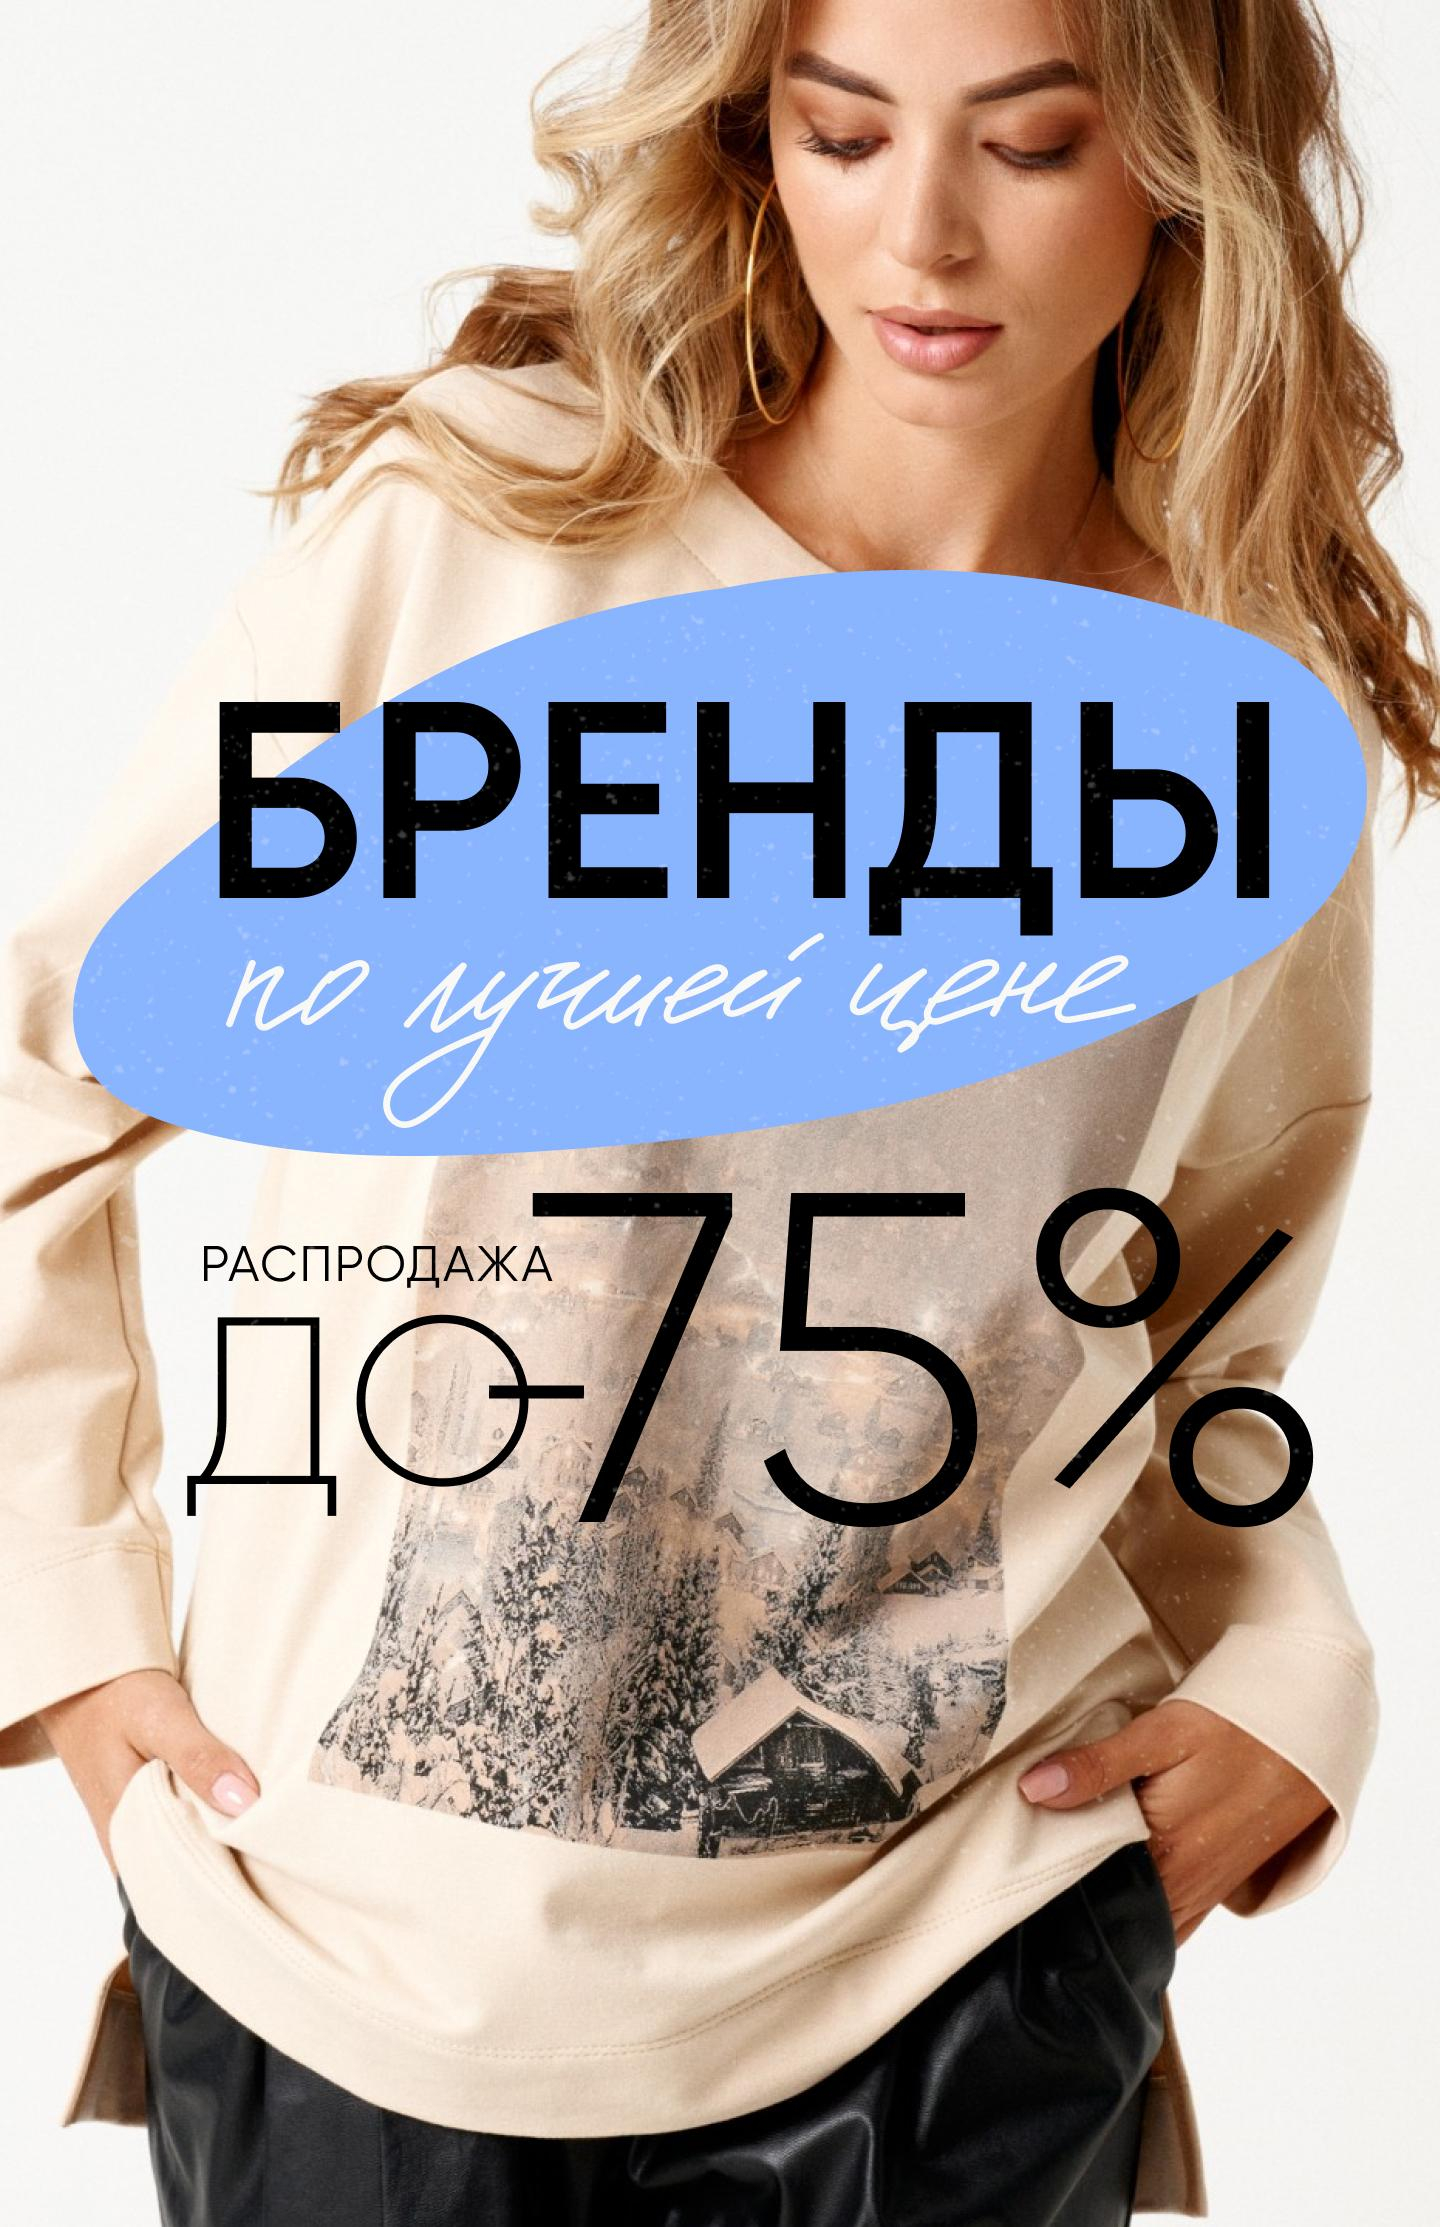 Bellavka Ru Интернет Магазин Белорусской Одежды